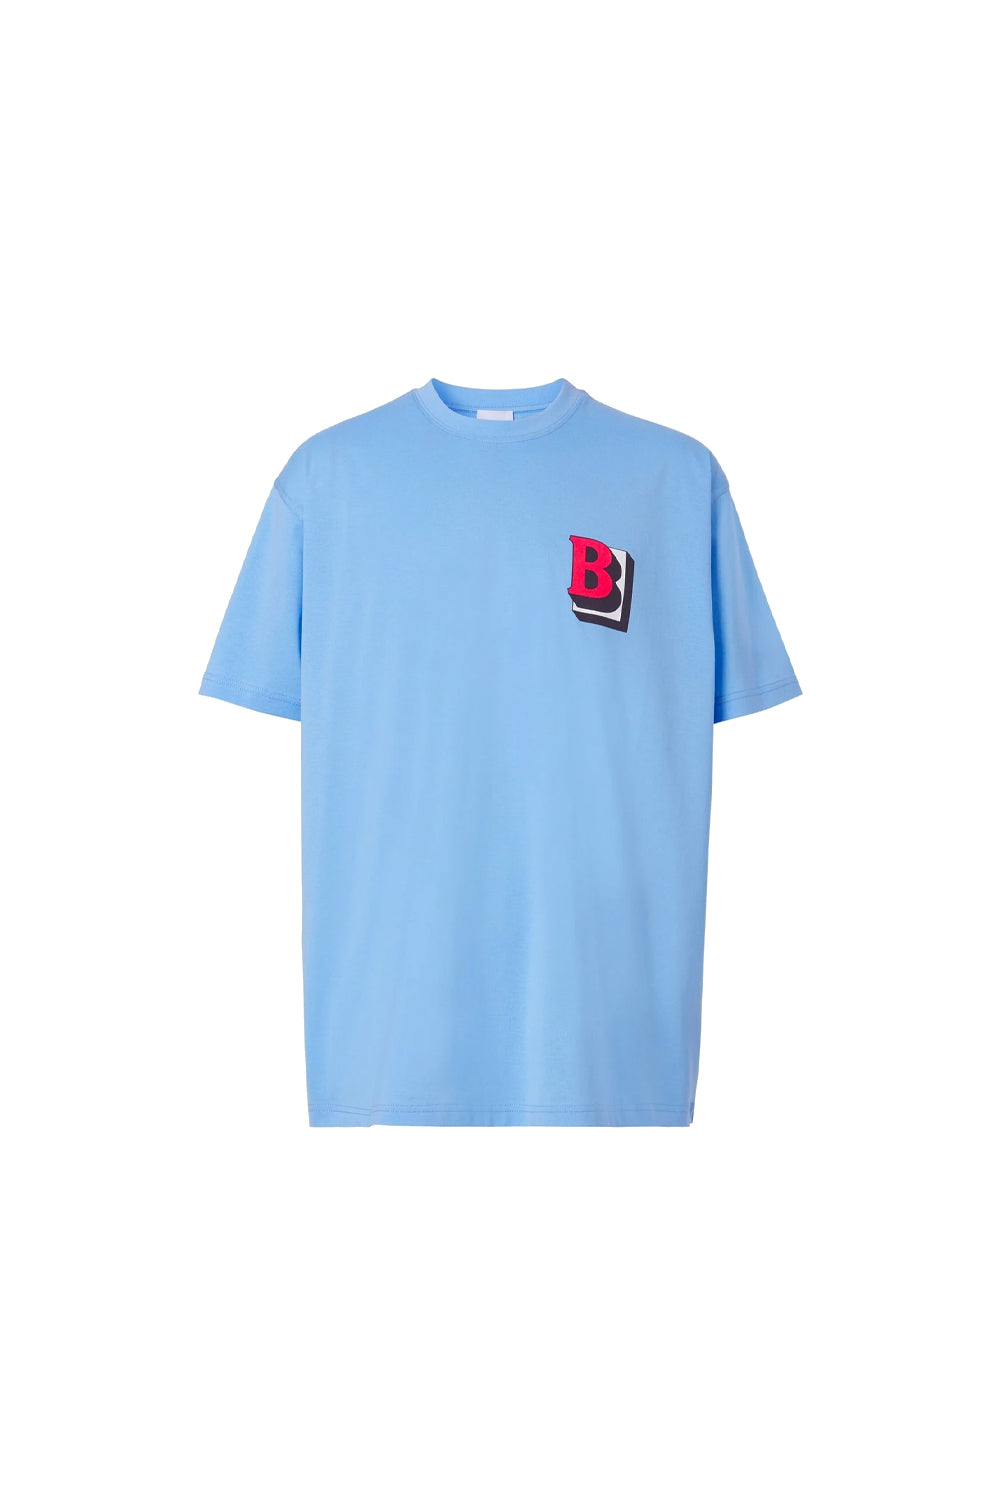 Burberry blue t-shirt logo-print